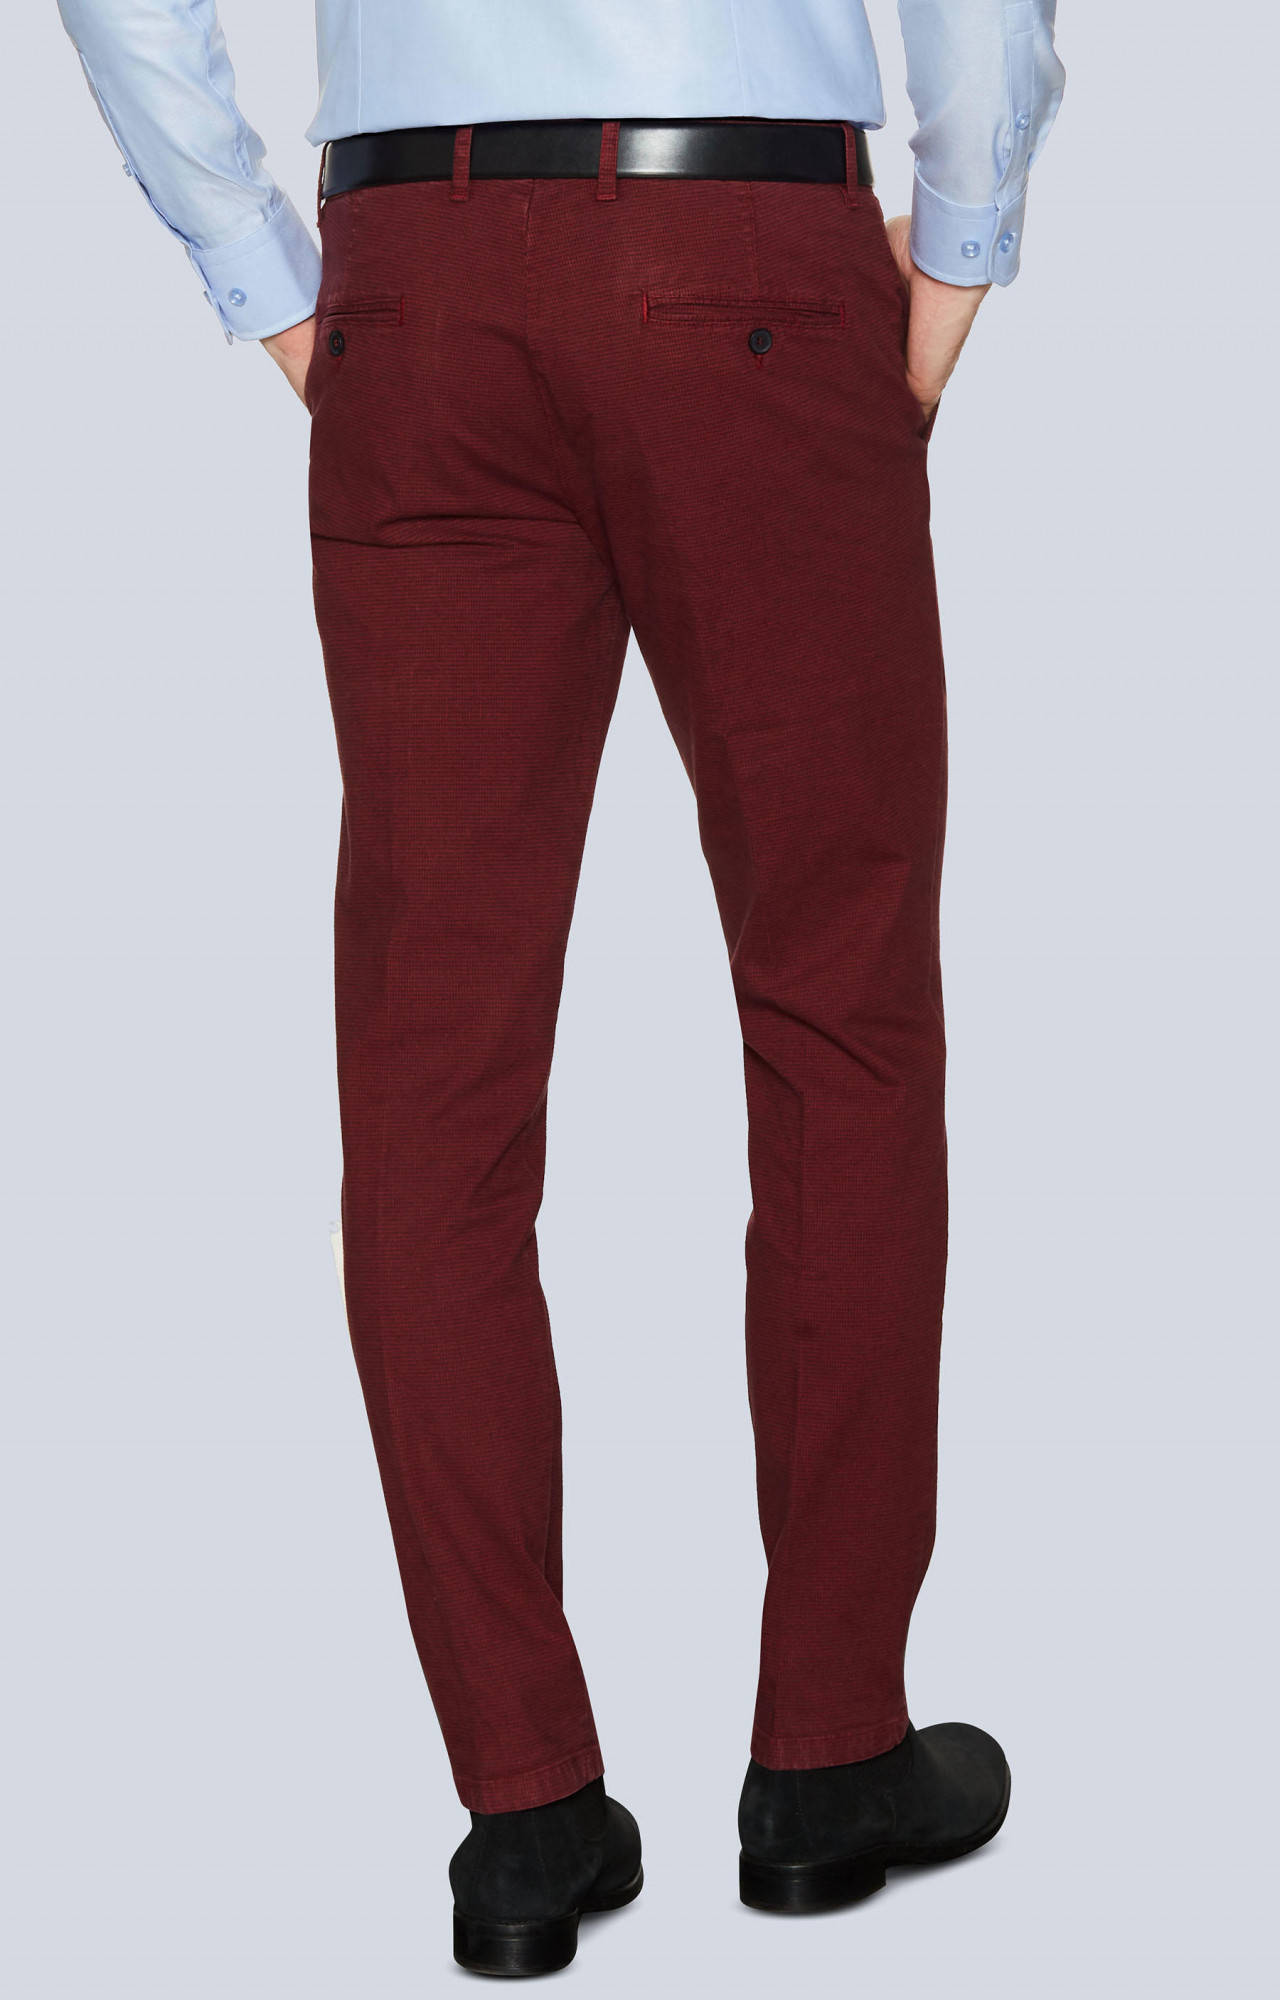 Pánské kalhoty XA9658 - Vistula 32 tm.červená-černá